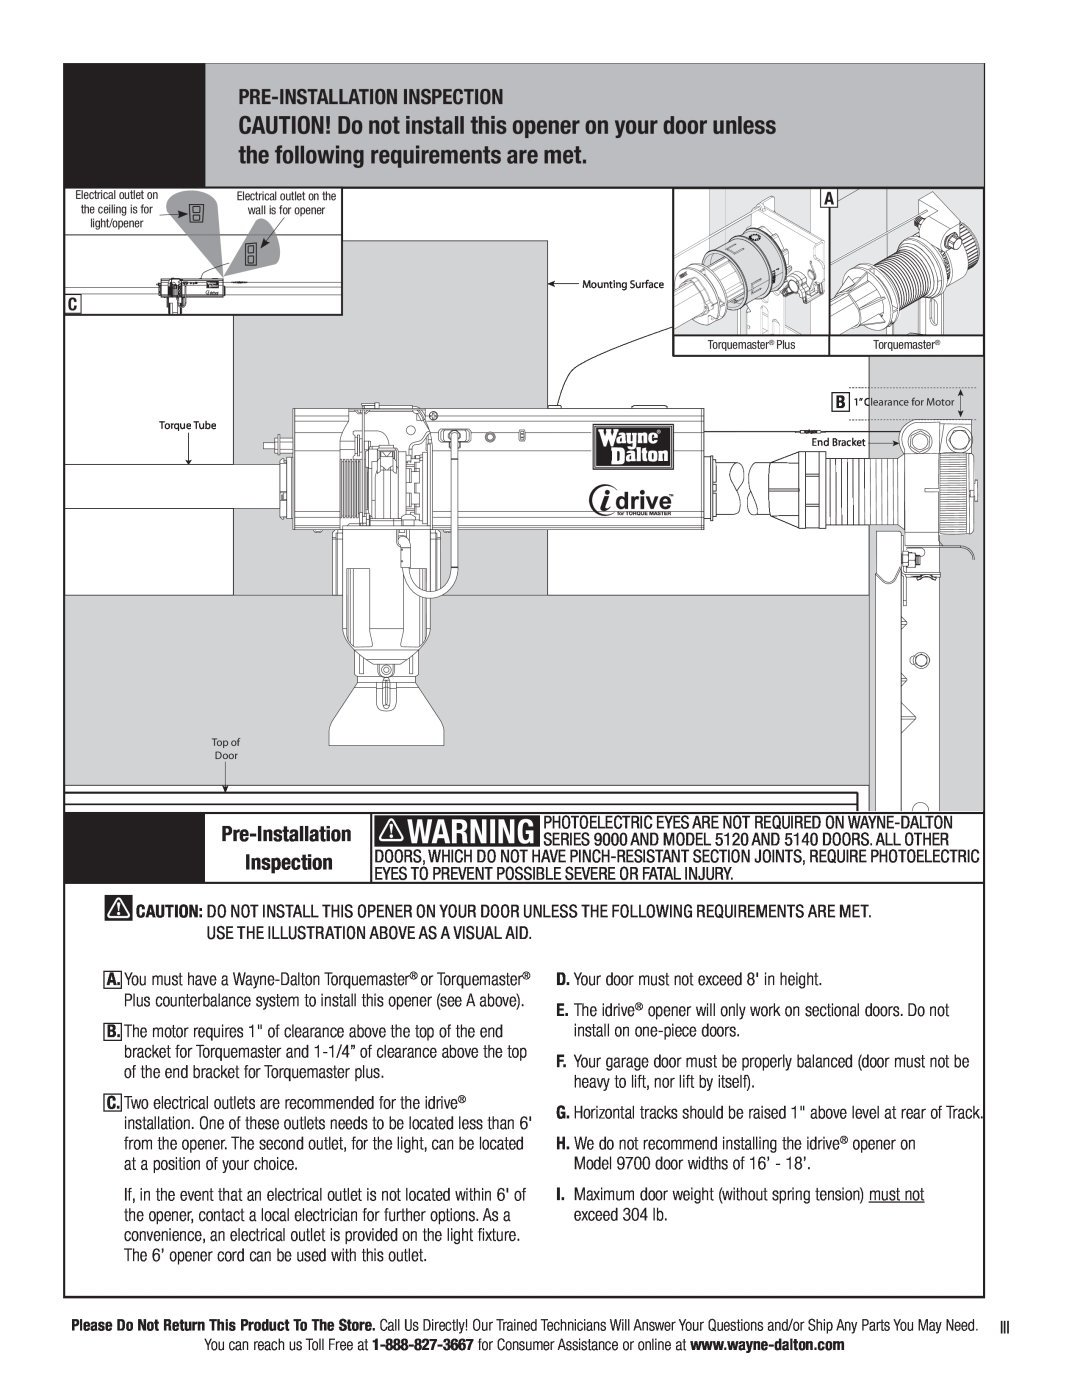 Wayne-Dalton 3663-372 installation instructions Pre-Installationinspection, Inspection 